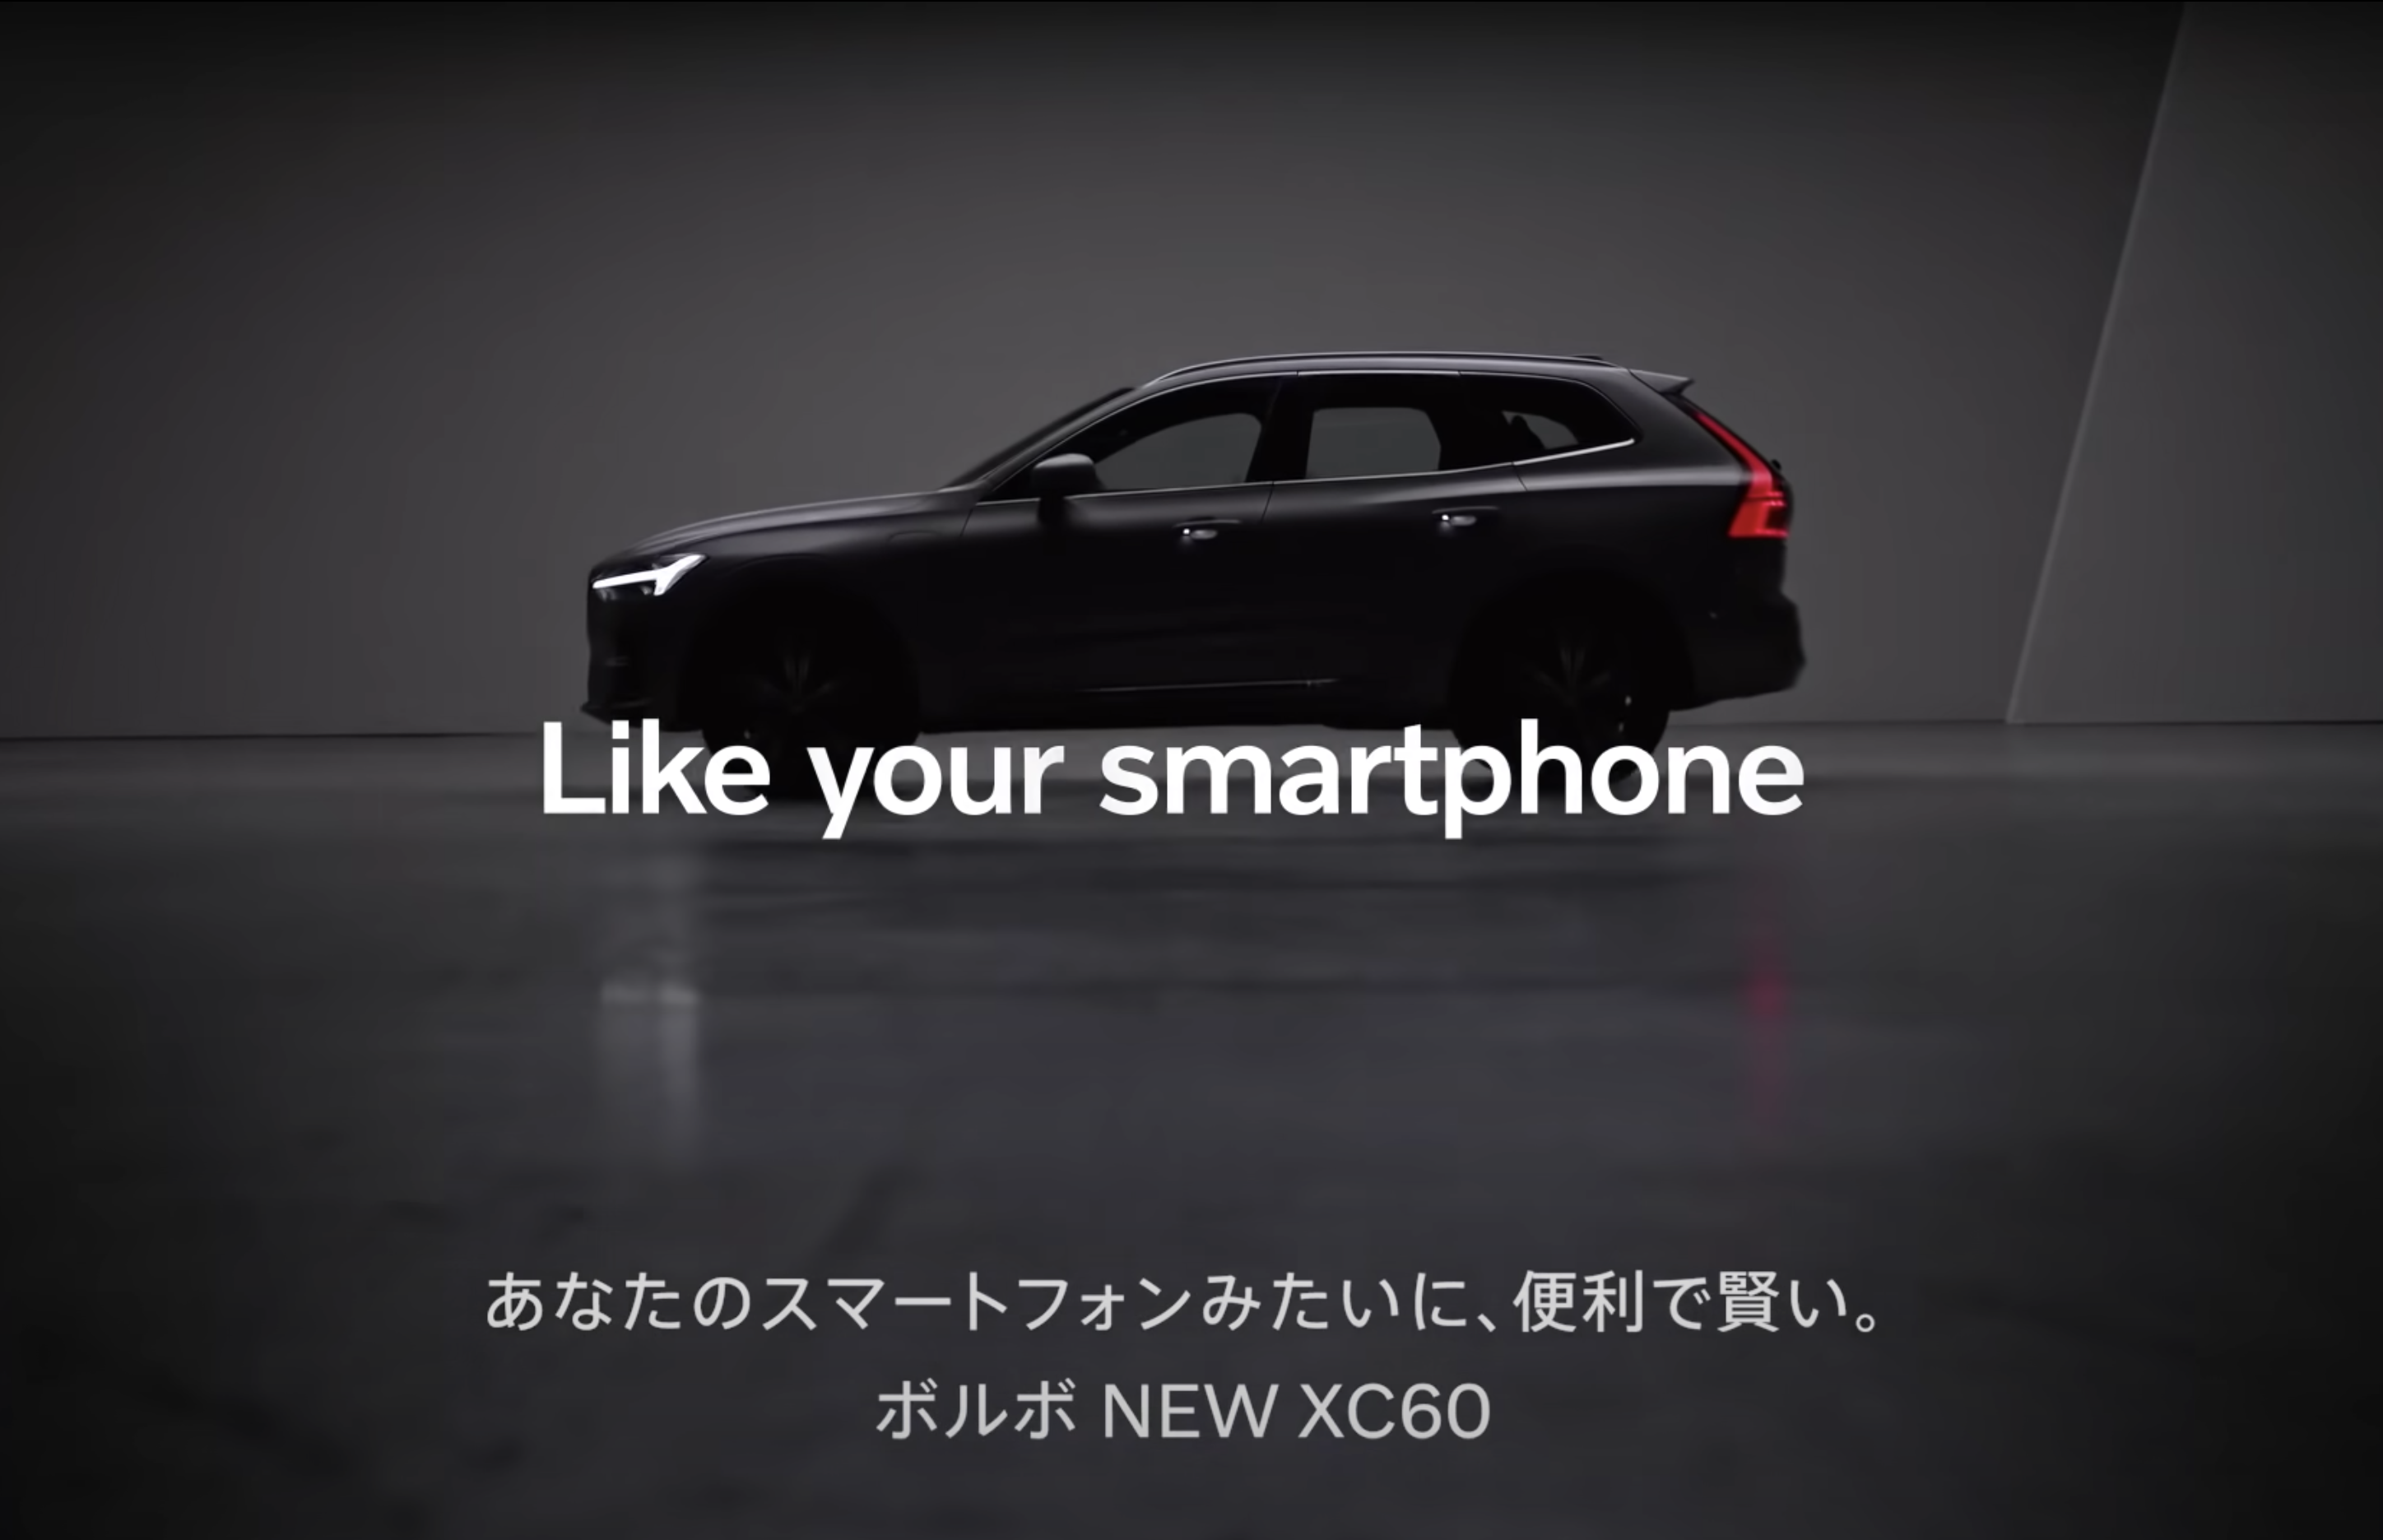 【VOLVO】Smarter New XC60